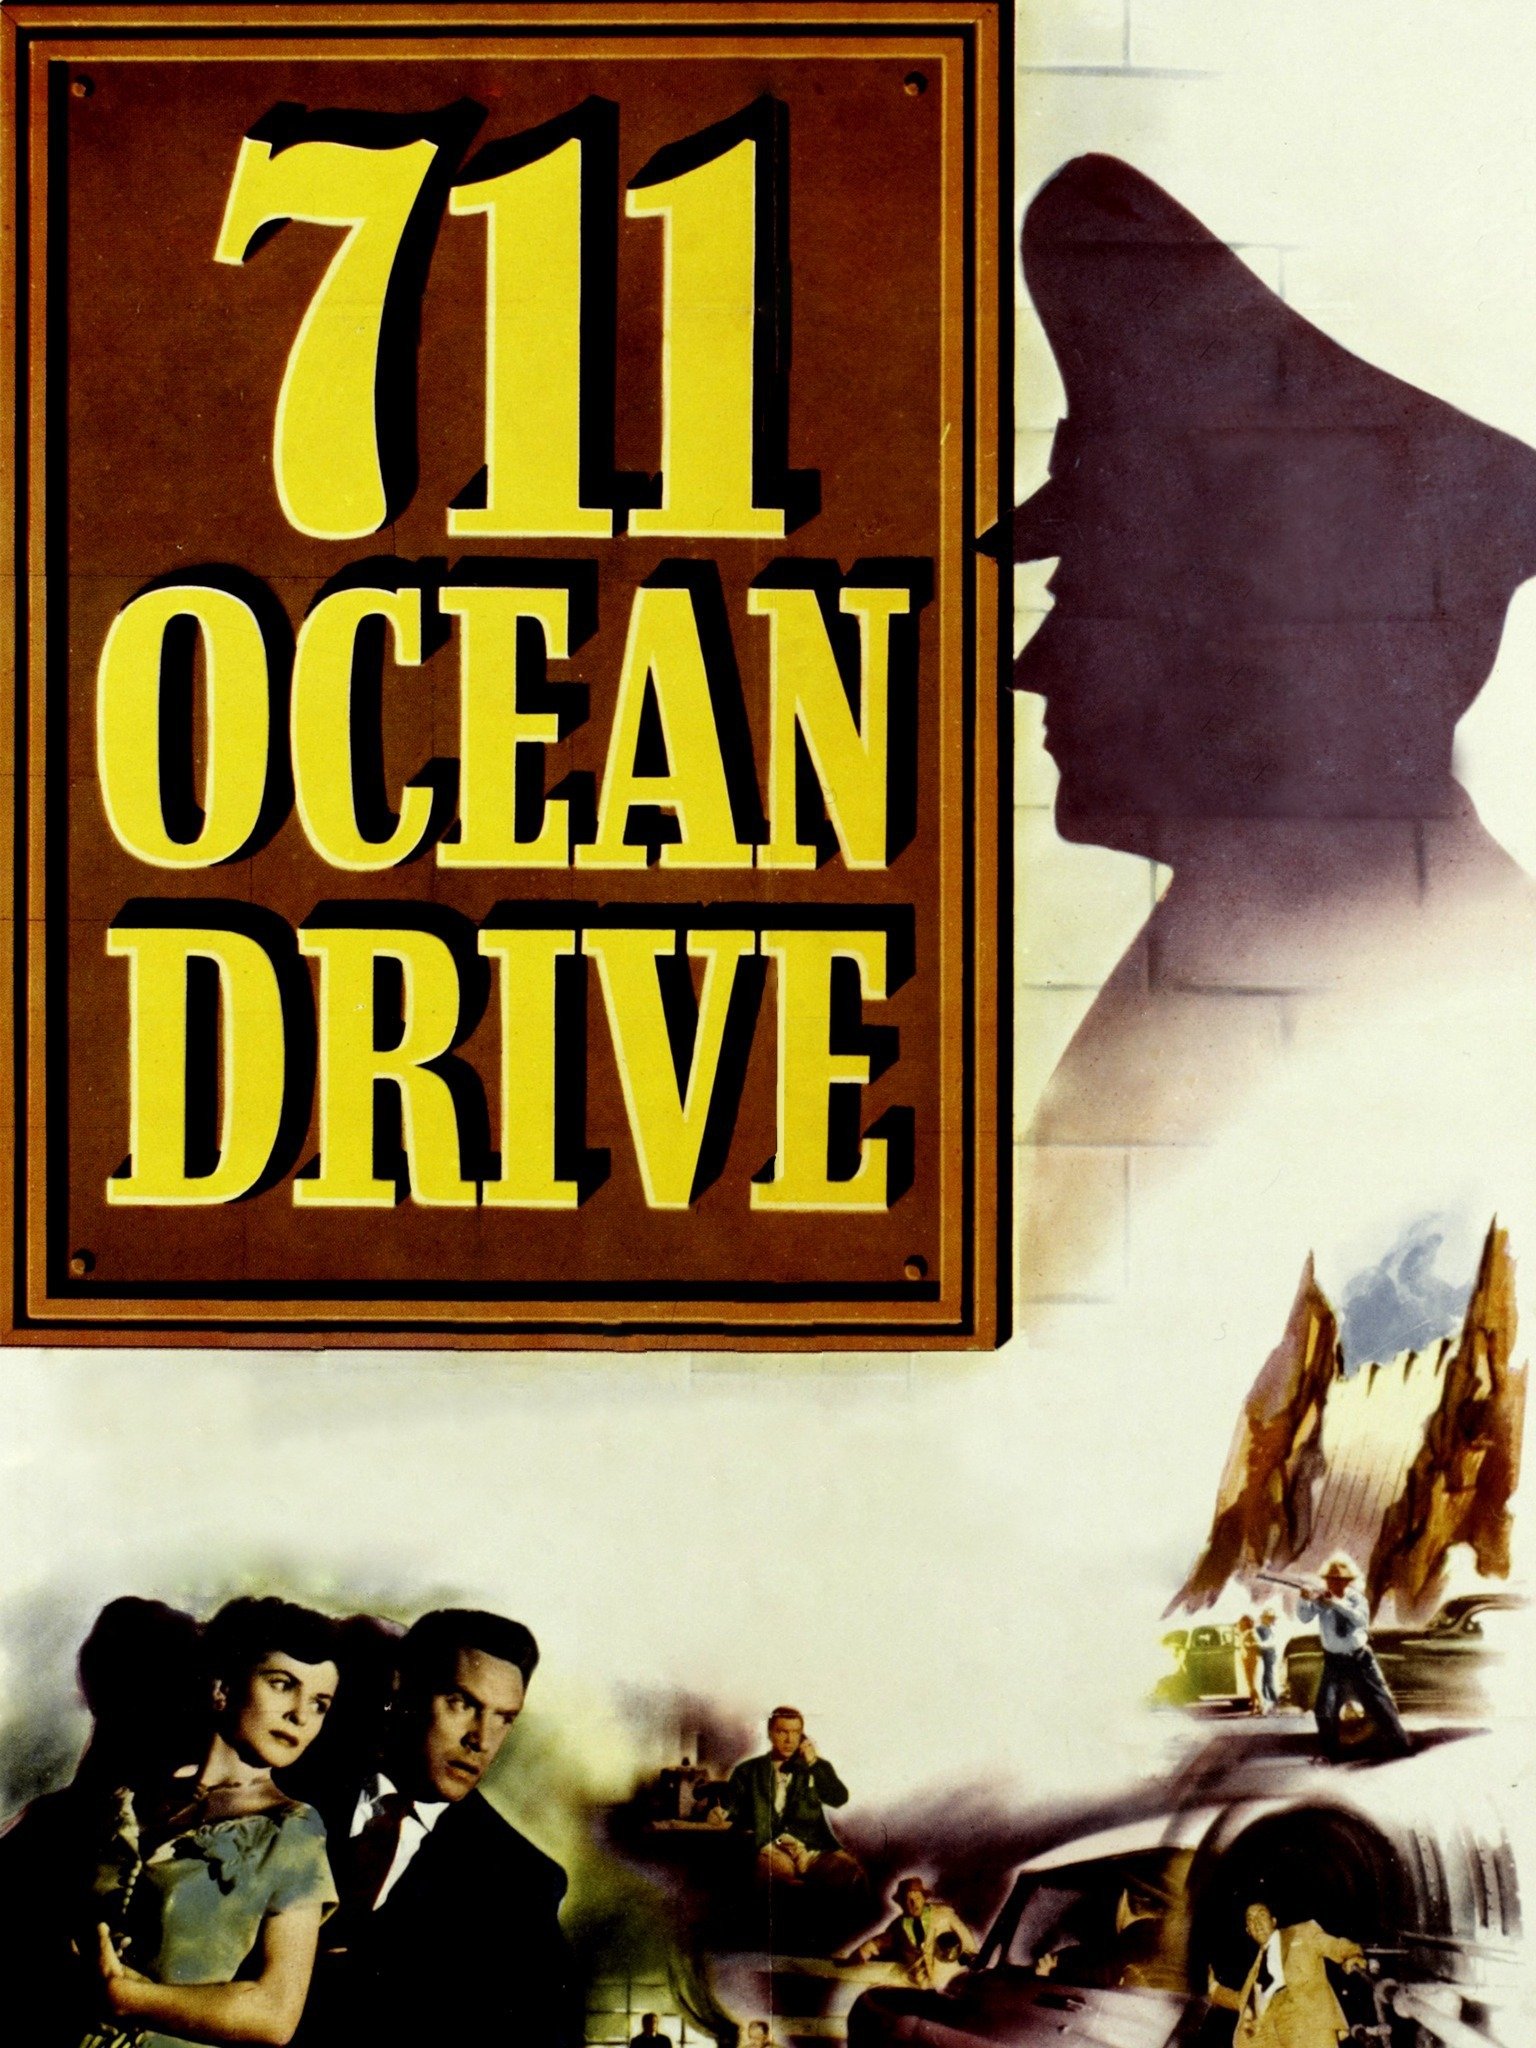 711 ocean drive movie review